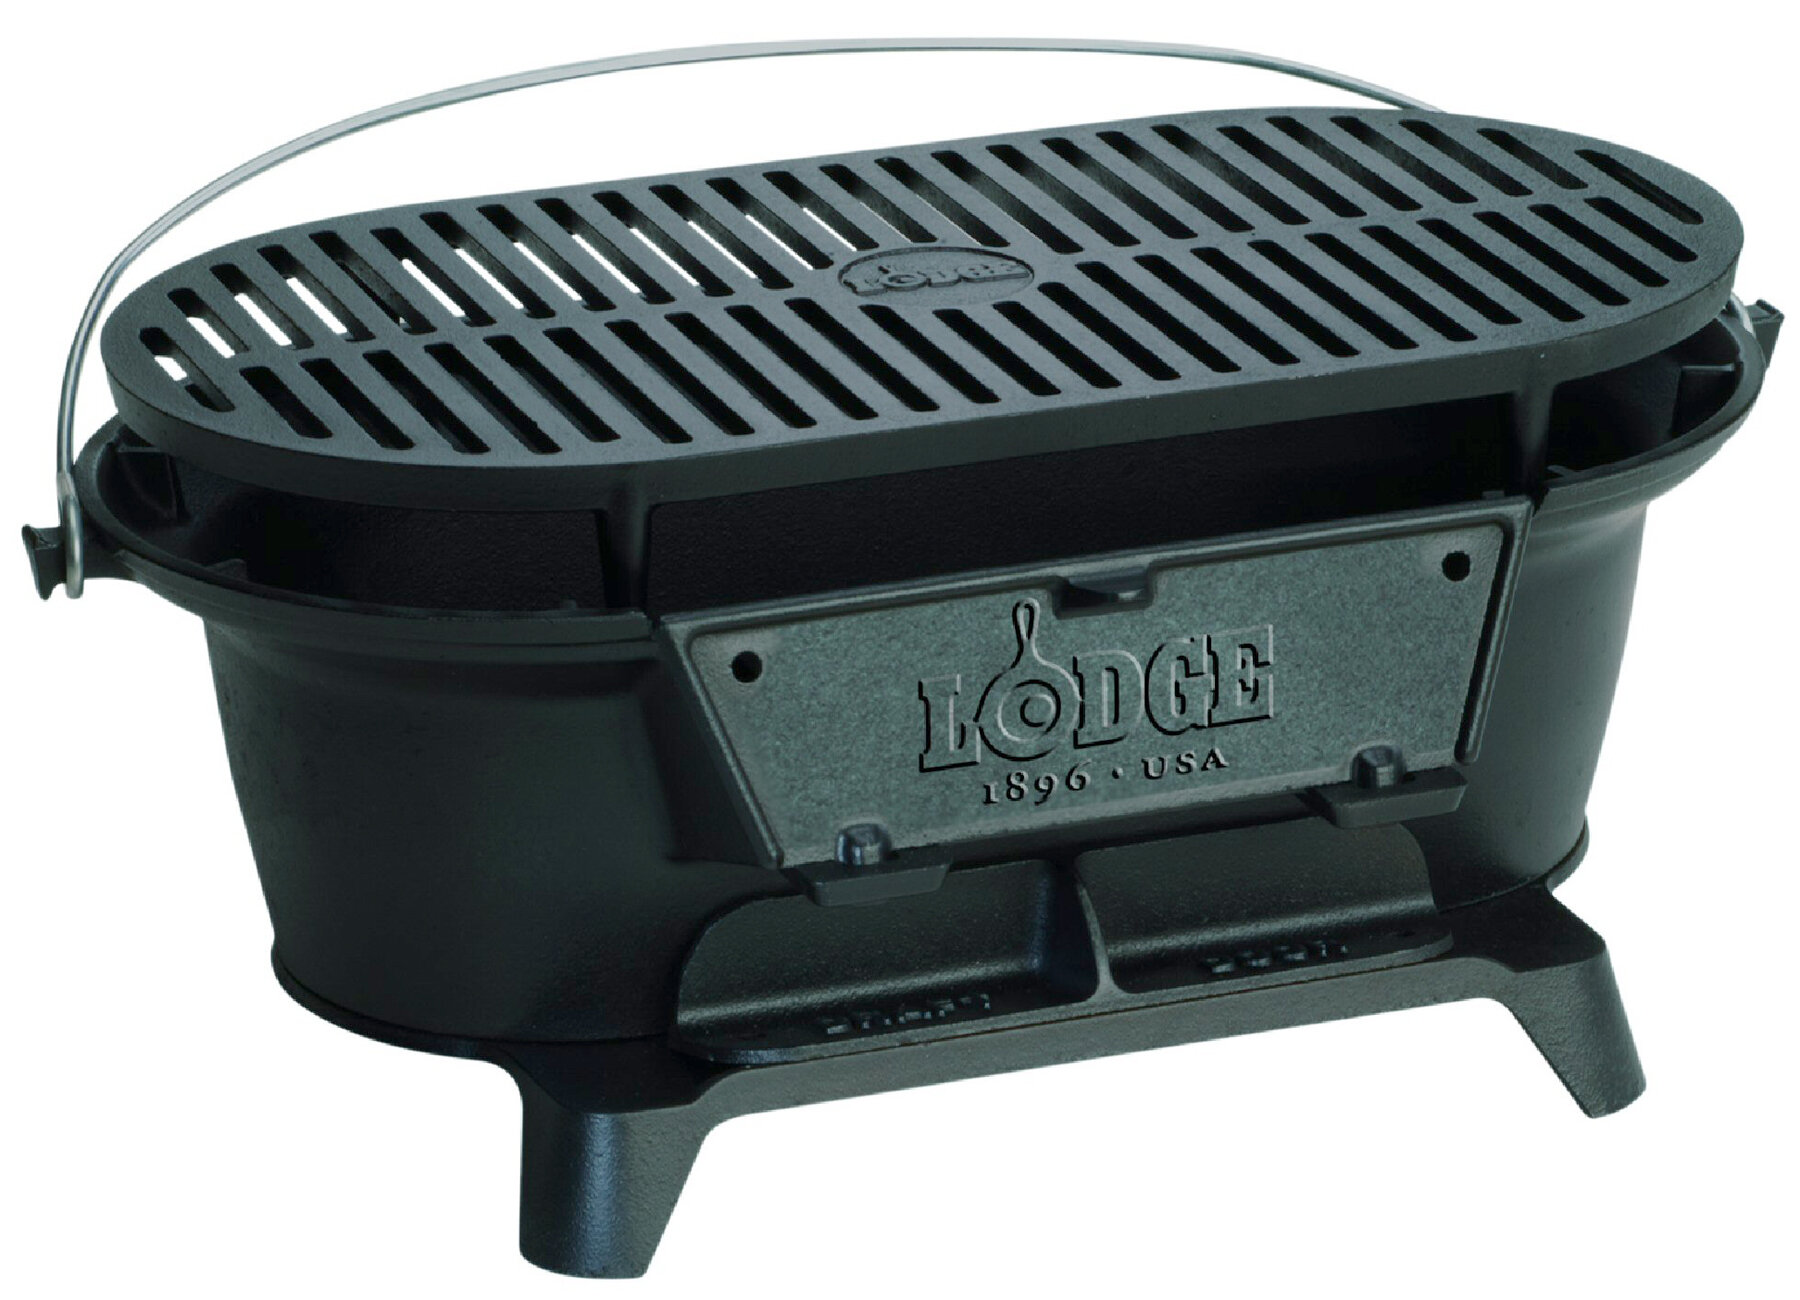 Lodge Hibachi Portable Countertop Electric Grill Reviews Wayfair